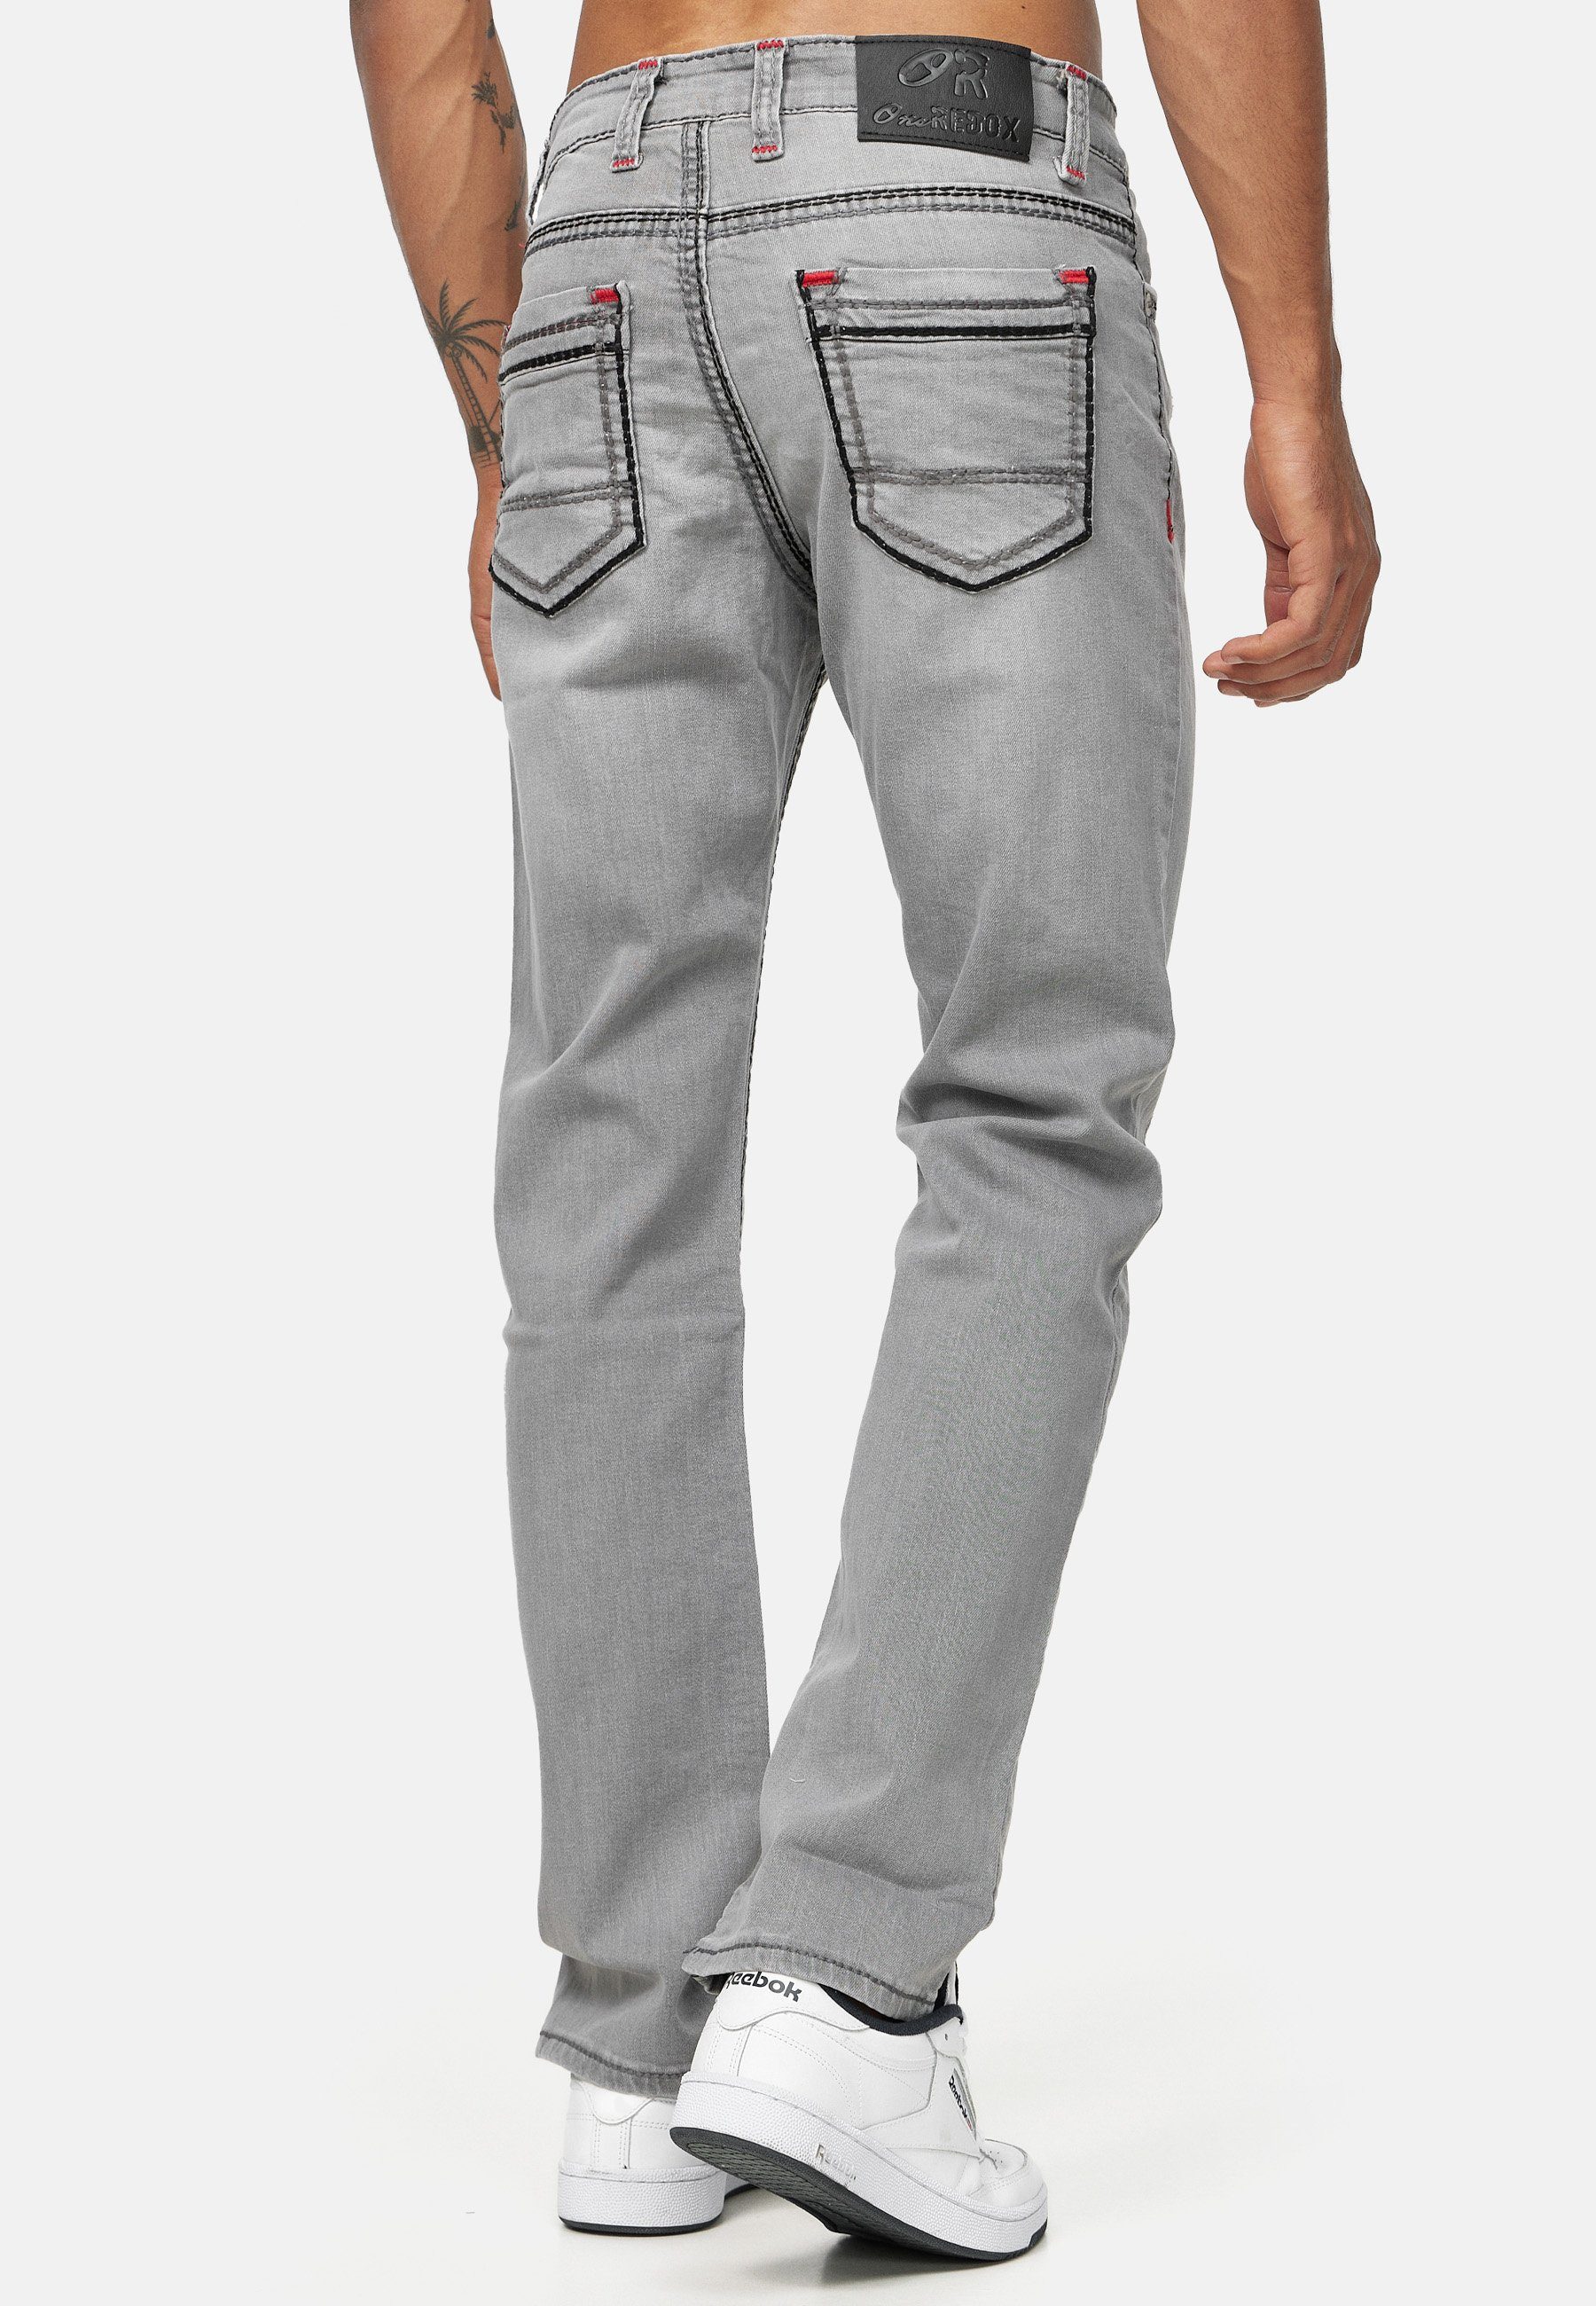 Modell Grau Code47 3337 Herren Regular-fit-Jeans Jeans Code47